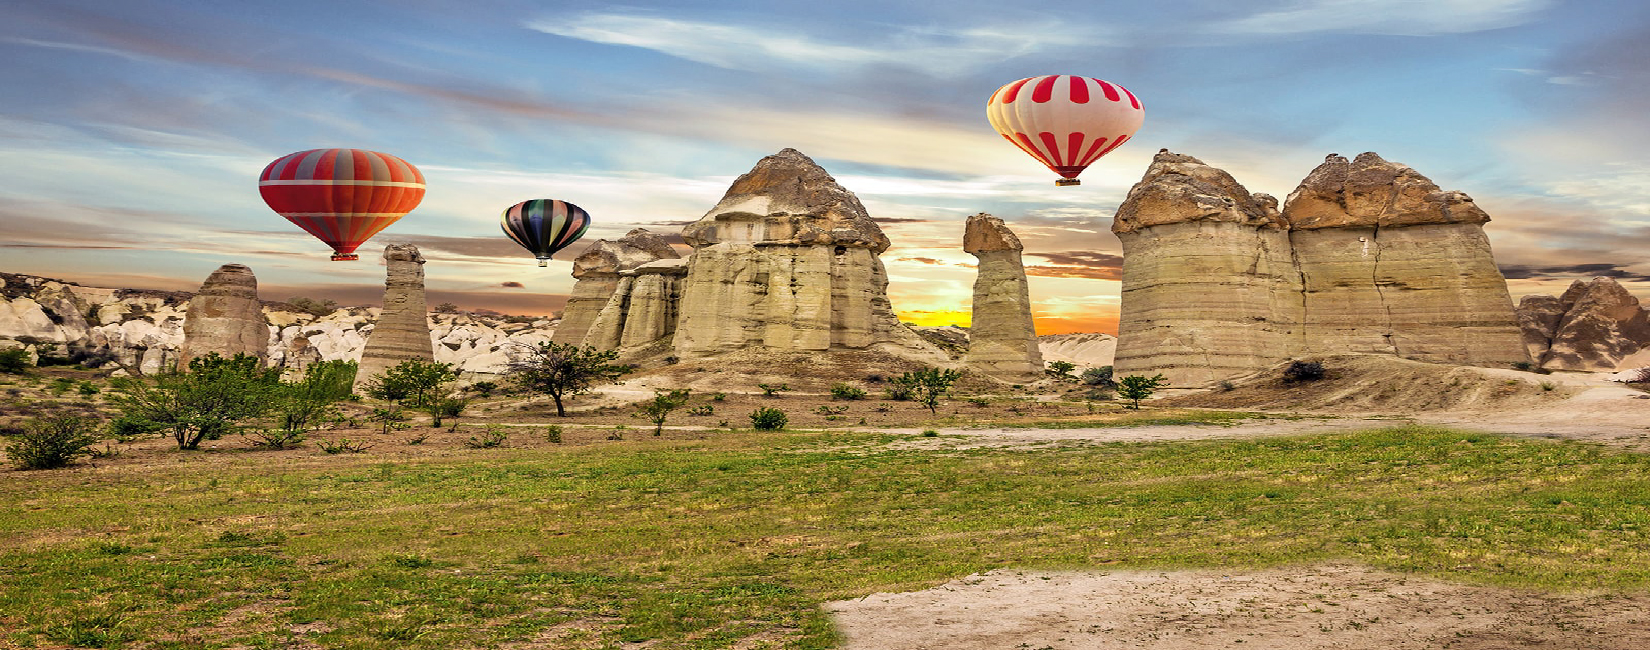 Turkey 02 Nights-03 Days Private Cappadocia Tour with Balloon Flight